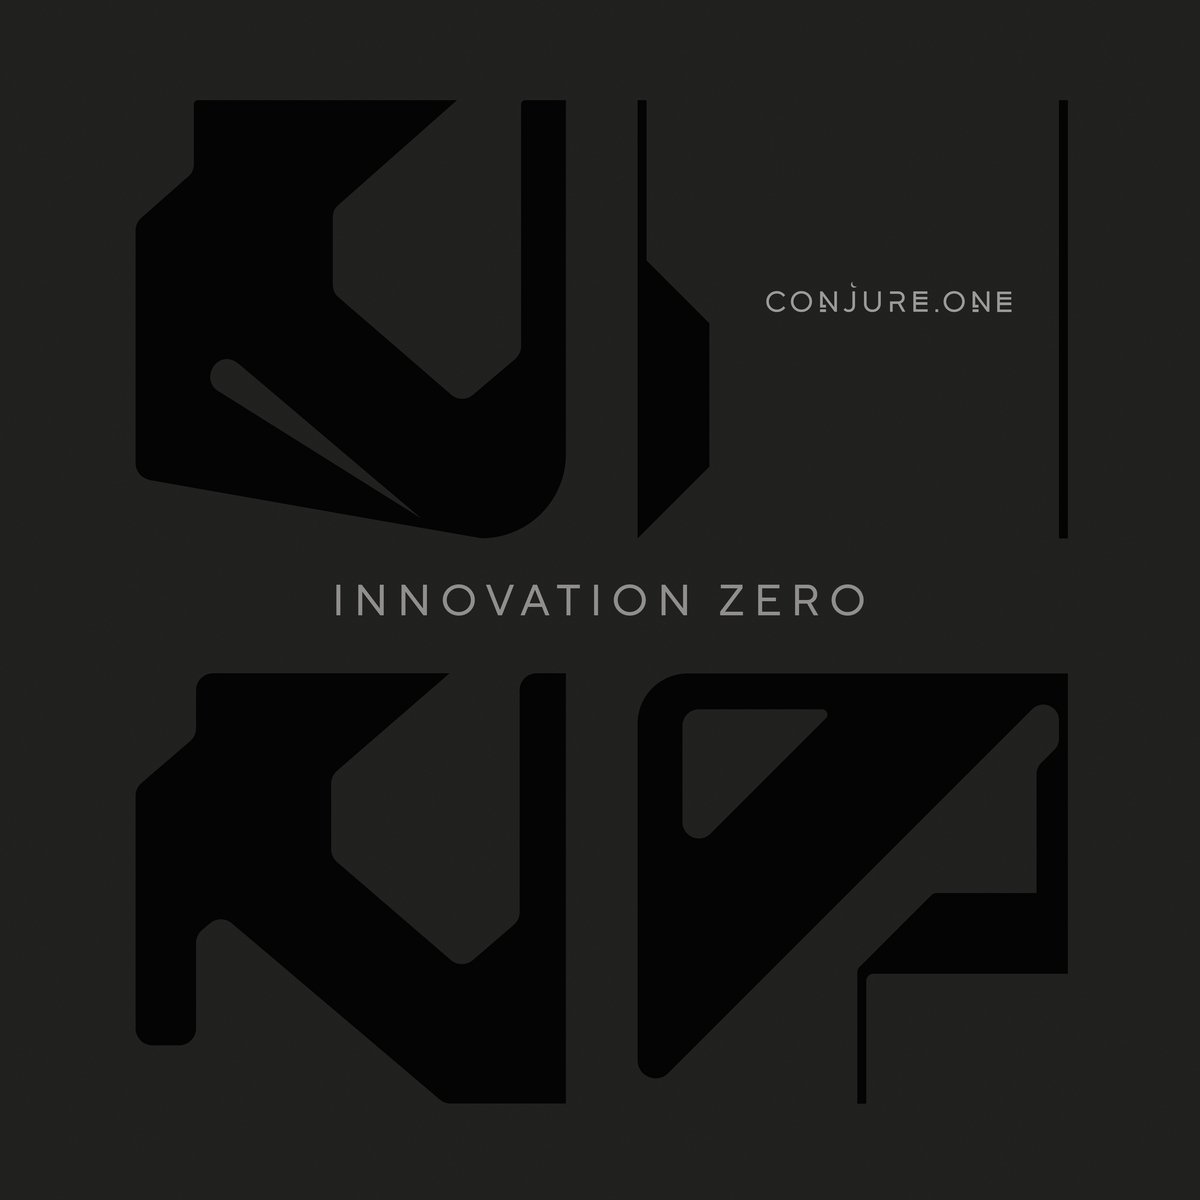 Innovation Zero - Conjure One